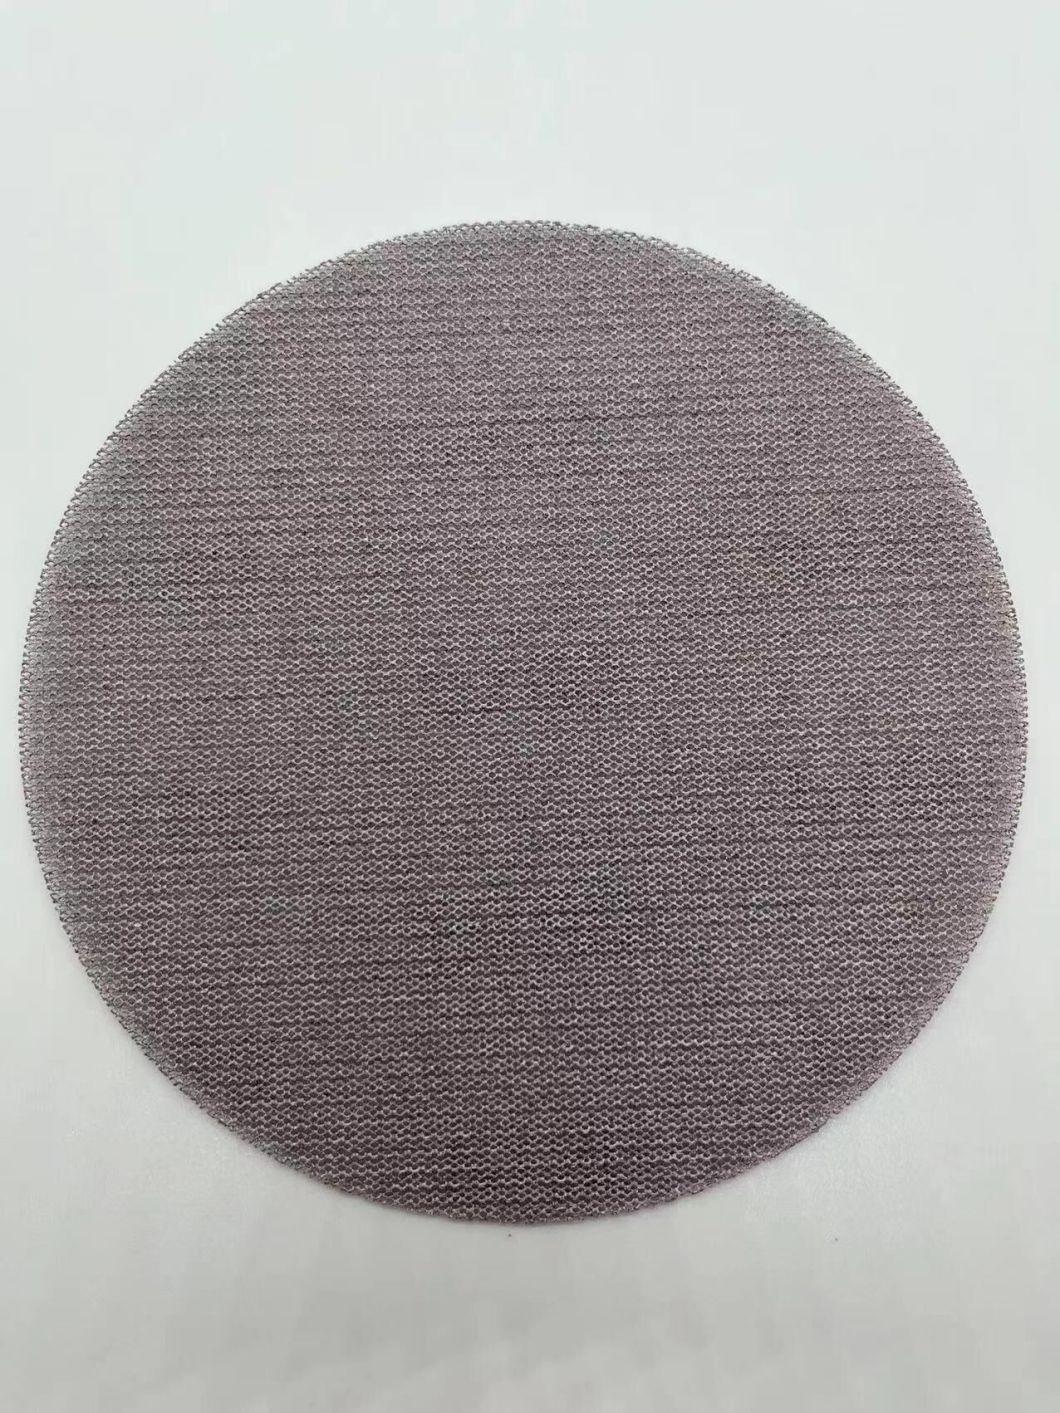 9 Inch 220mm Mesh Abrasive Dust Free Sanding Discs Anti-Blocking Dry Grinding Sandpaper 80 to 600